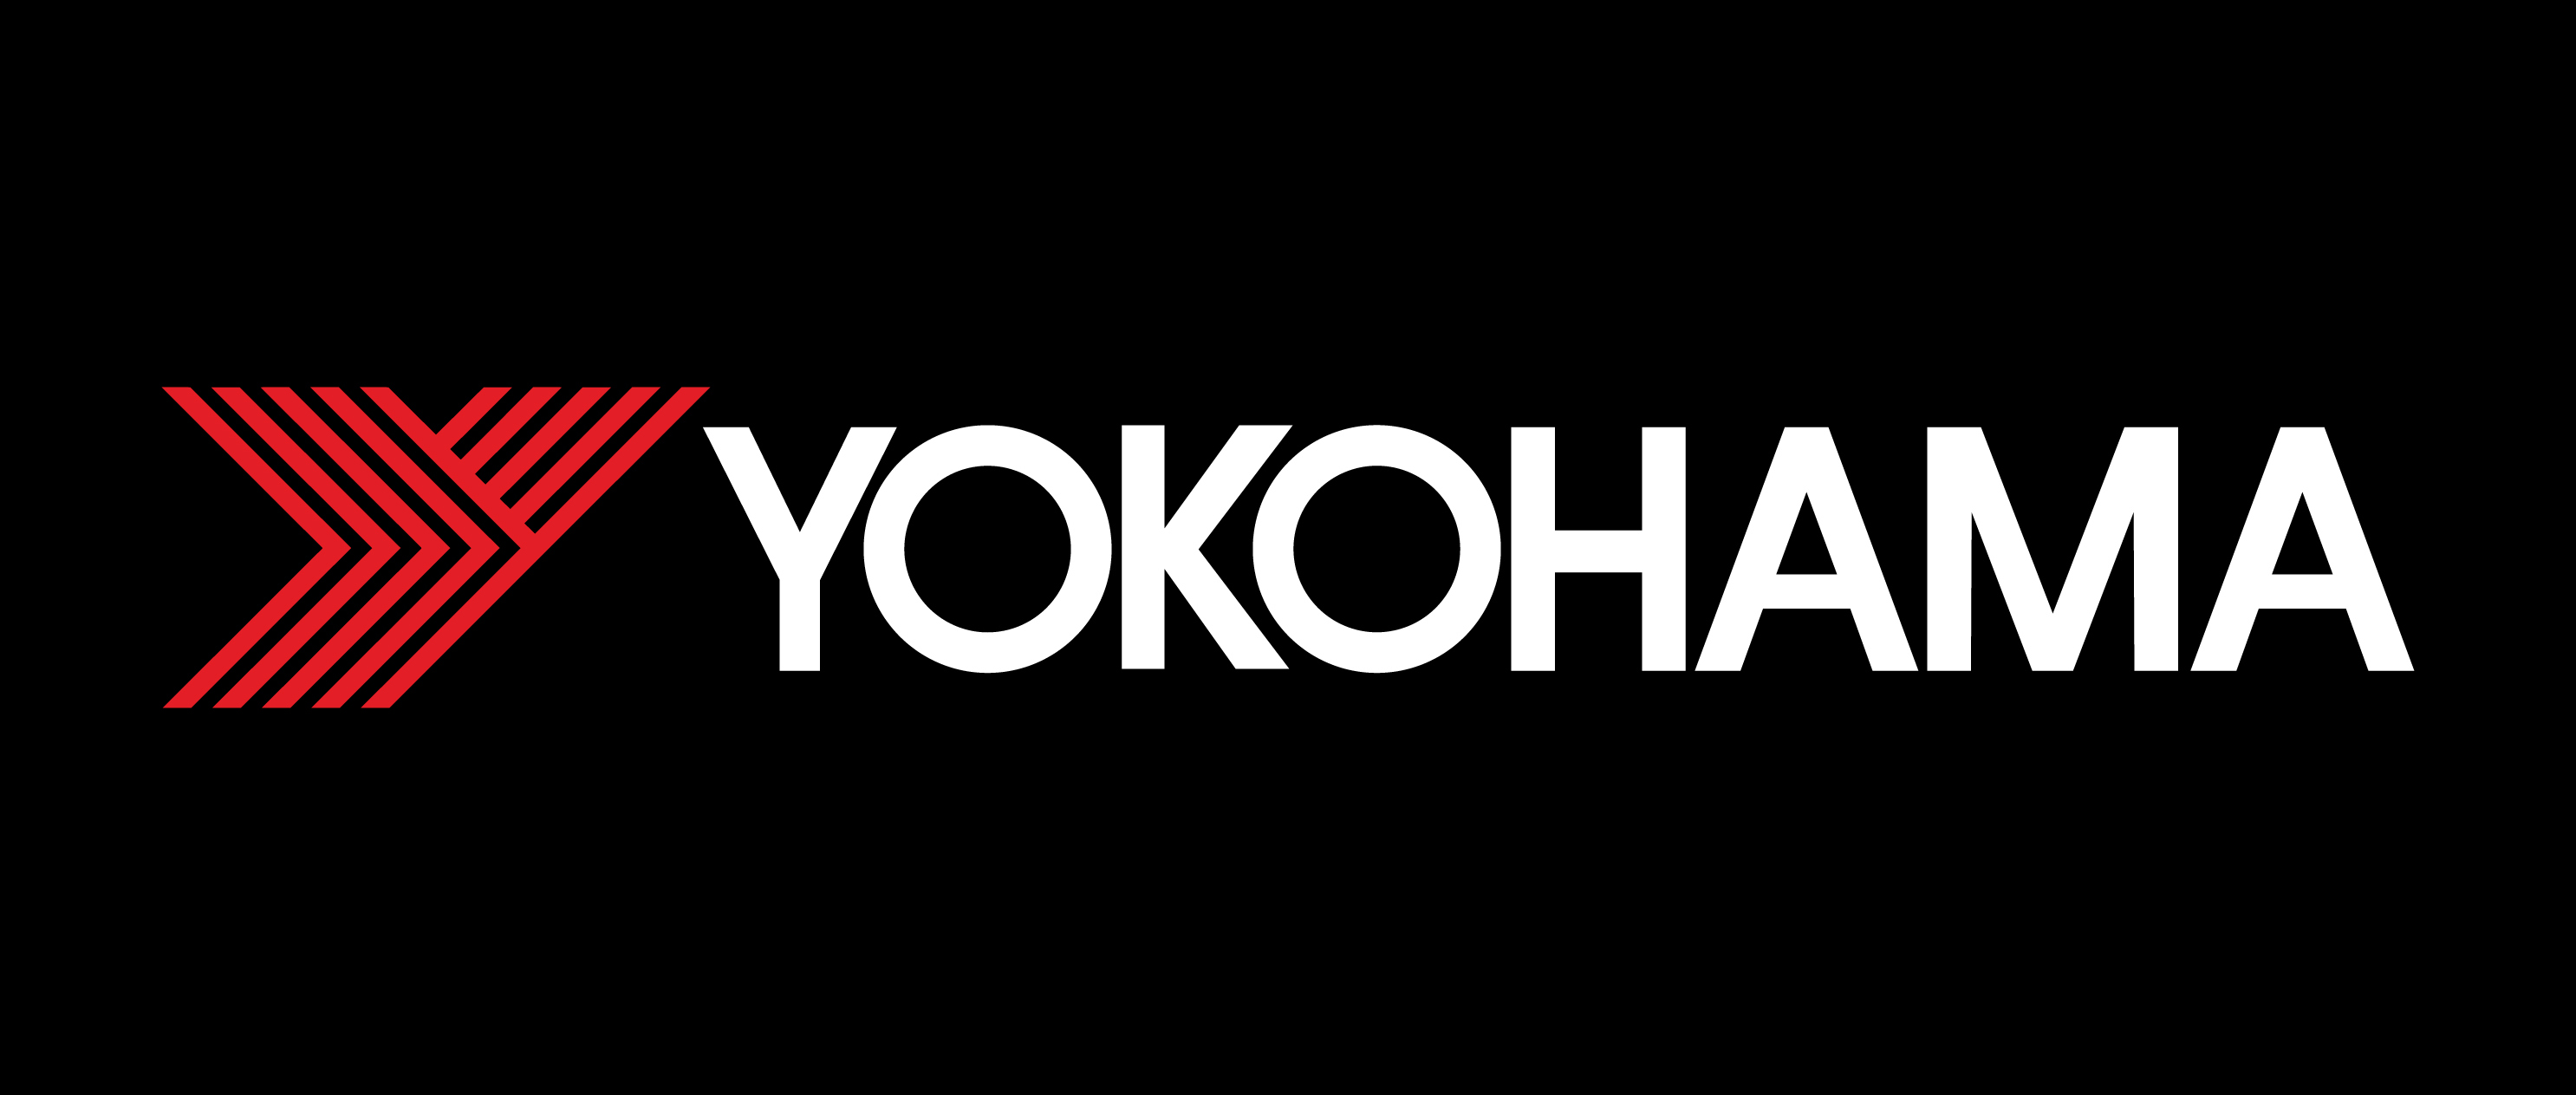 YOKOHAMA_black_logo